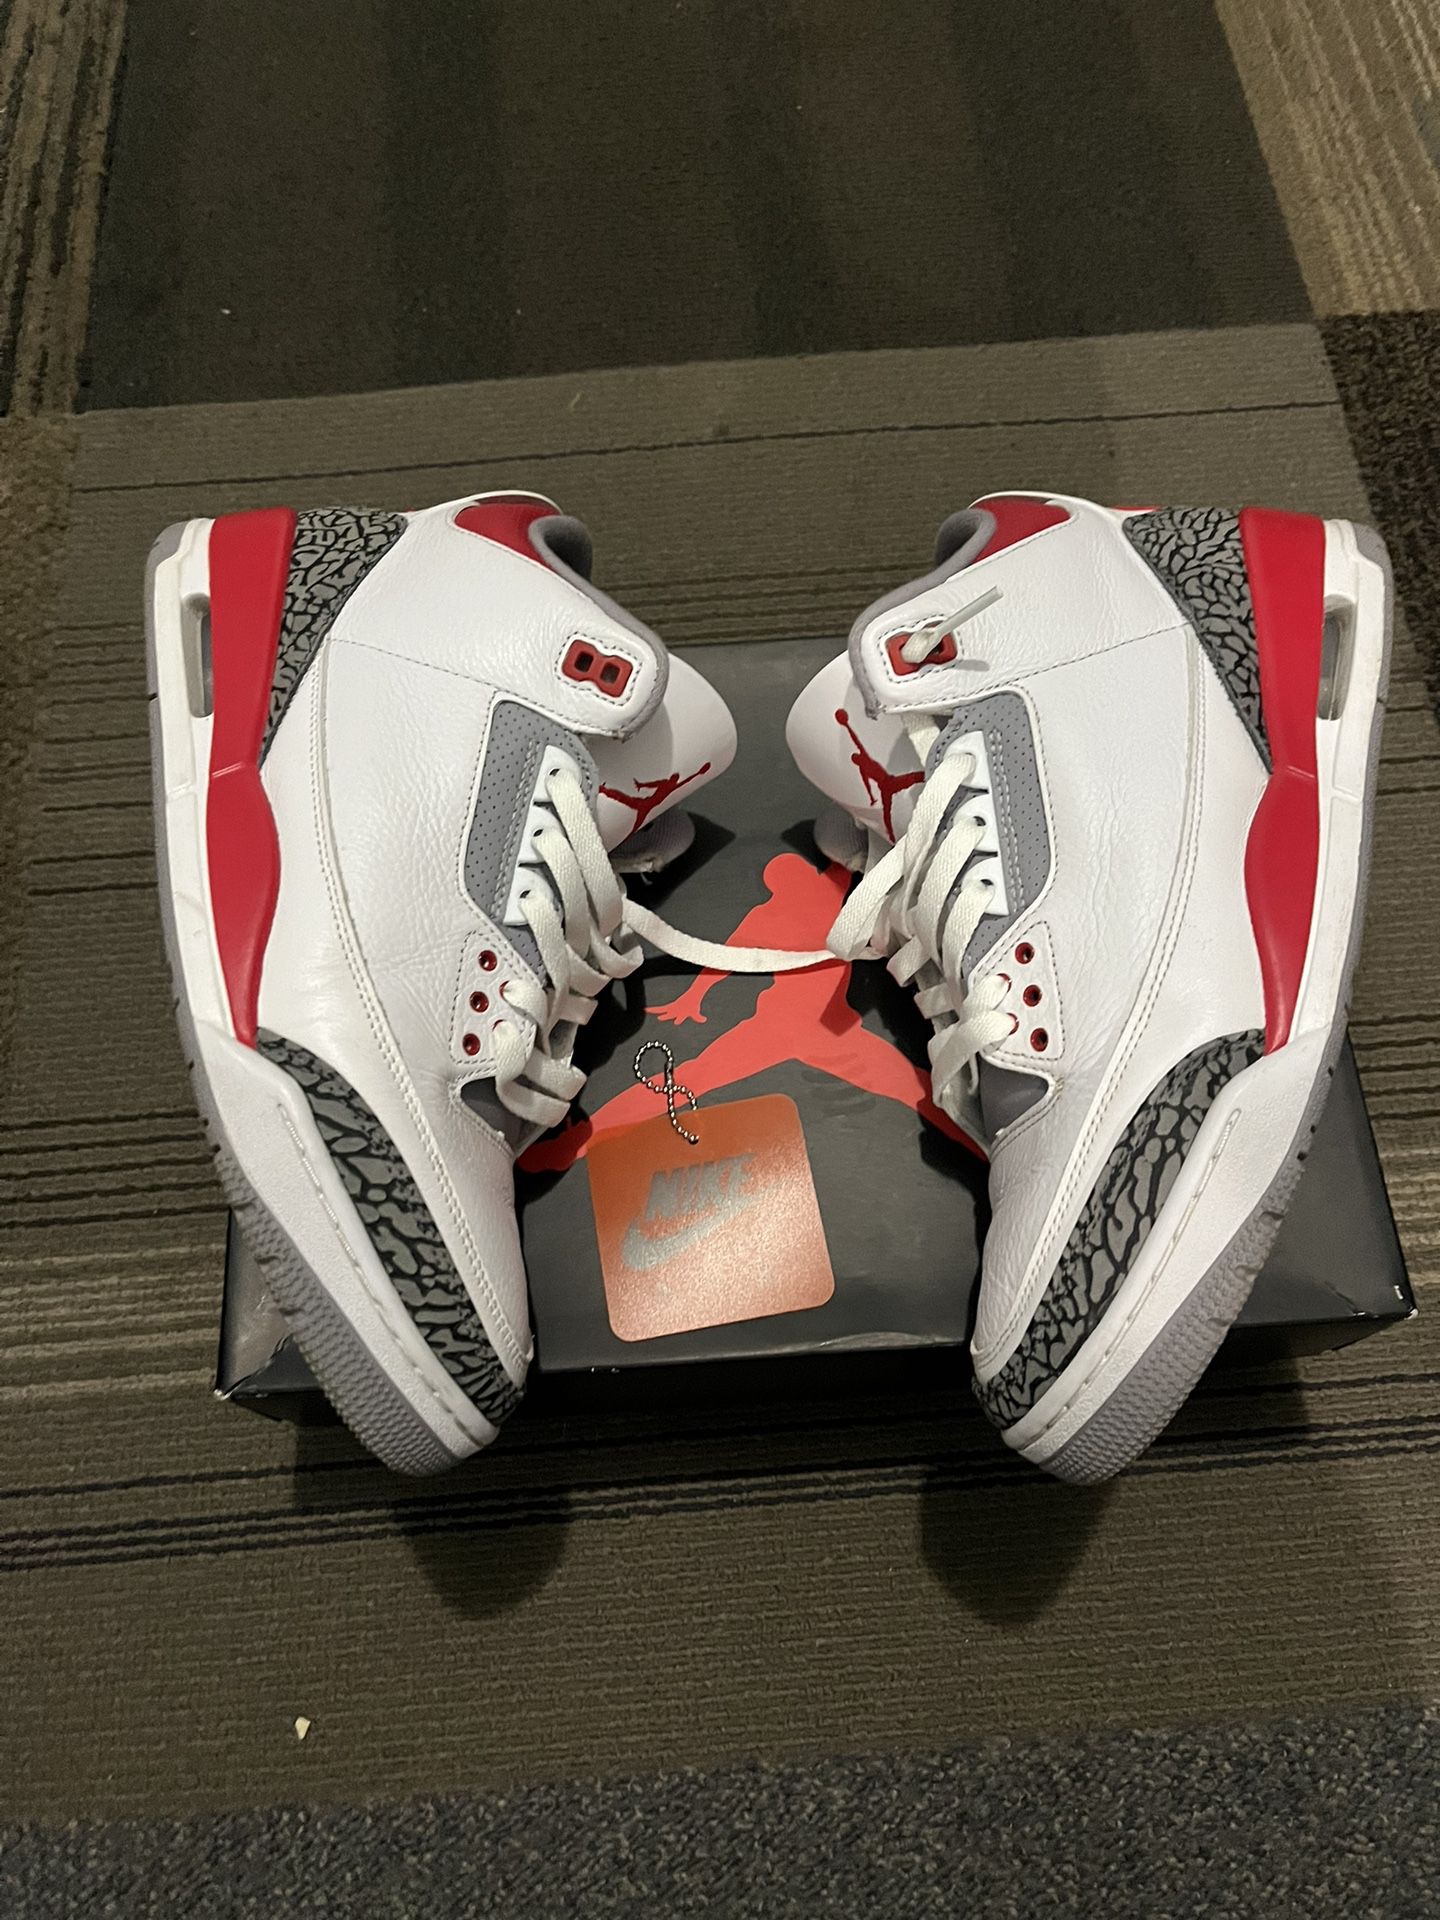 Size 10 - Jordan 3 Retro Mid Fire Red